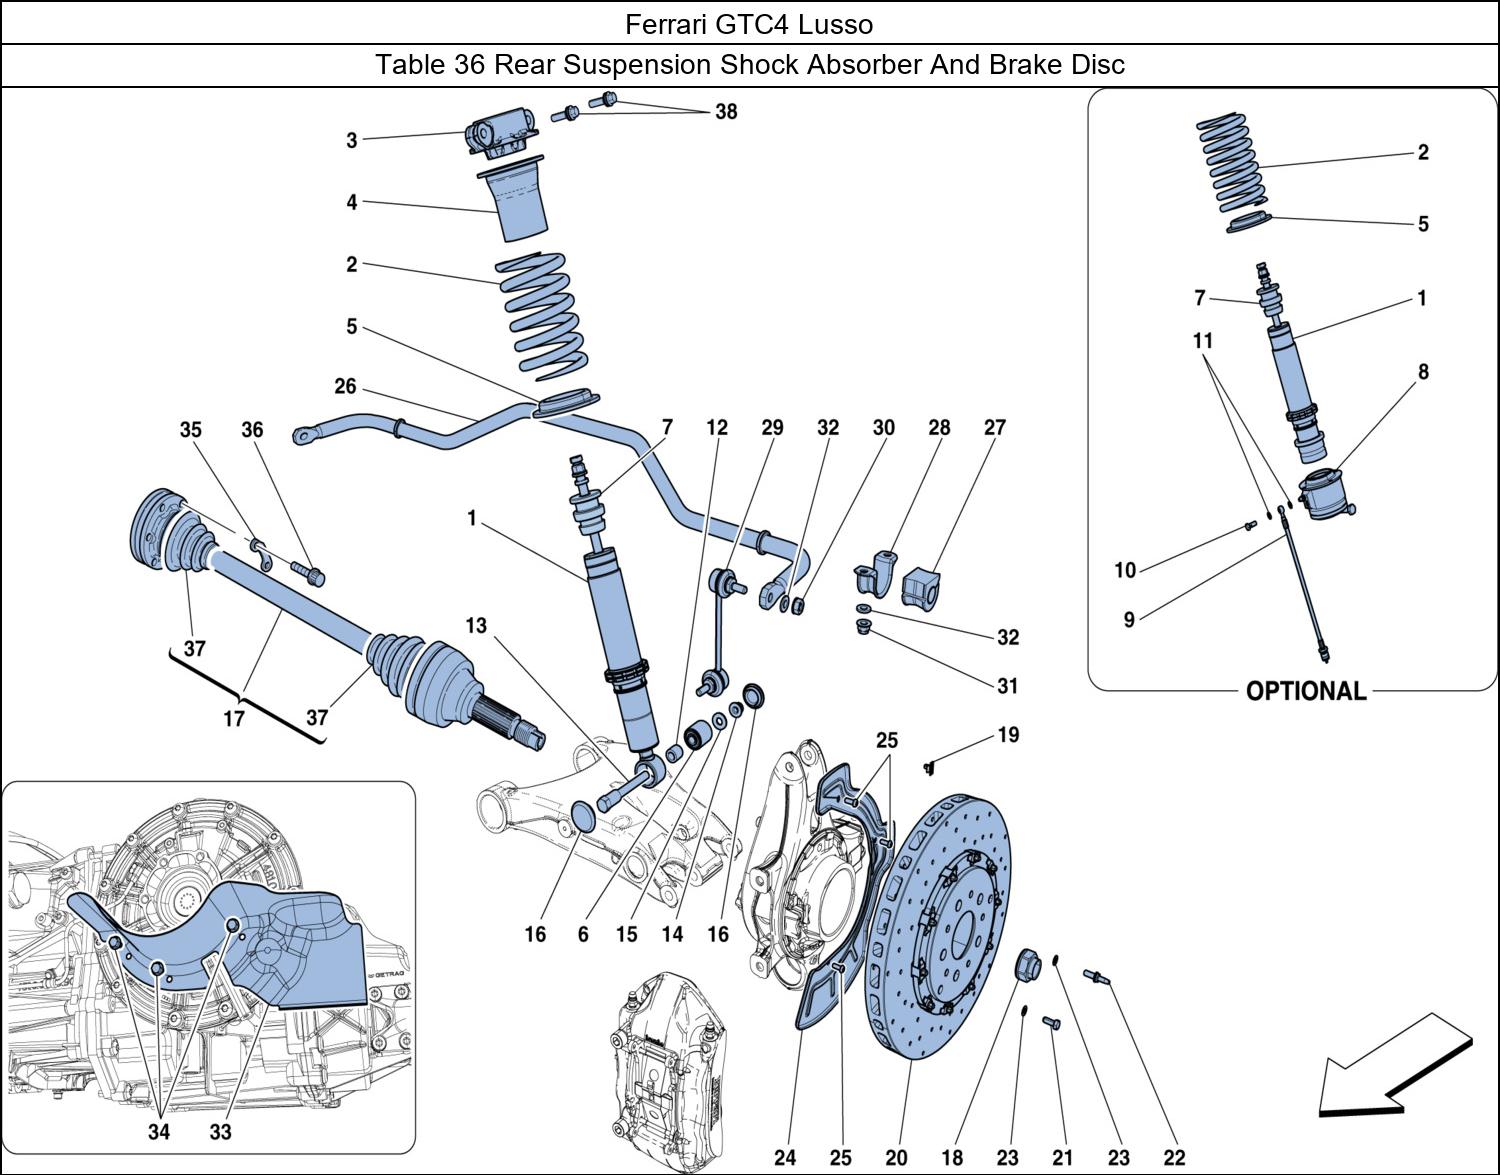 Ferrari Parts Ferrari GTC4 Lusso Table 36 Rear Suspension Shock Absorber And Brake Disc